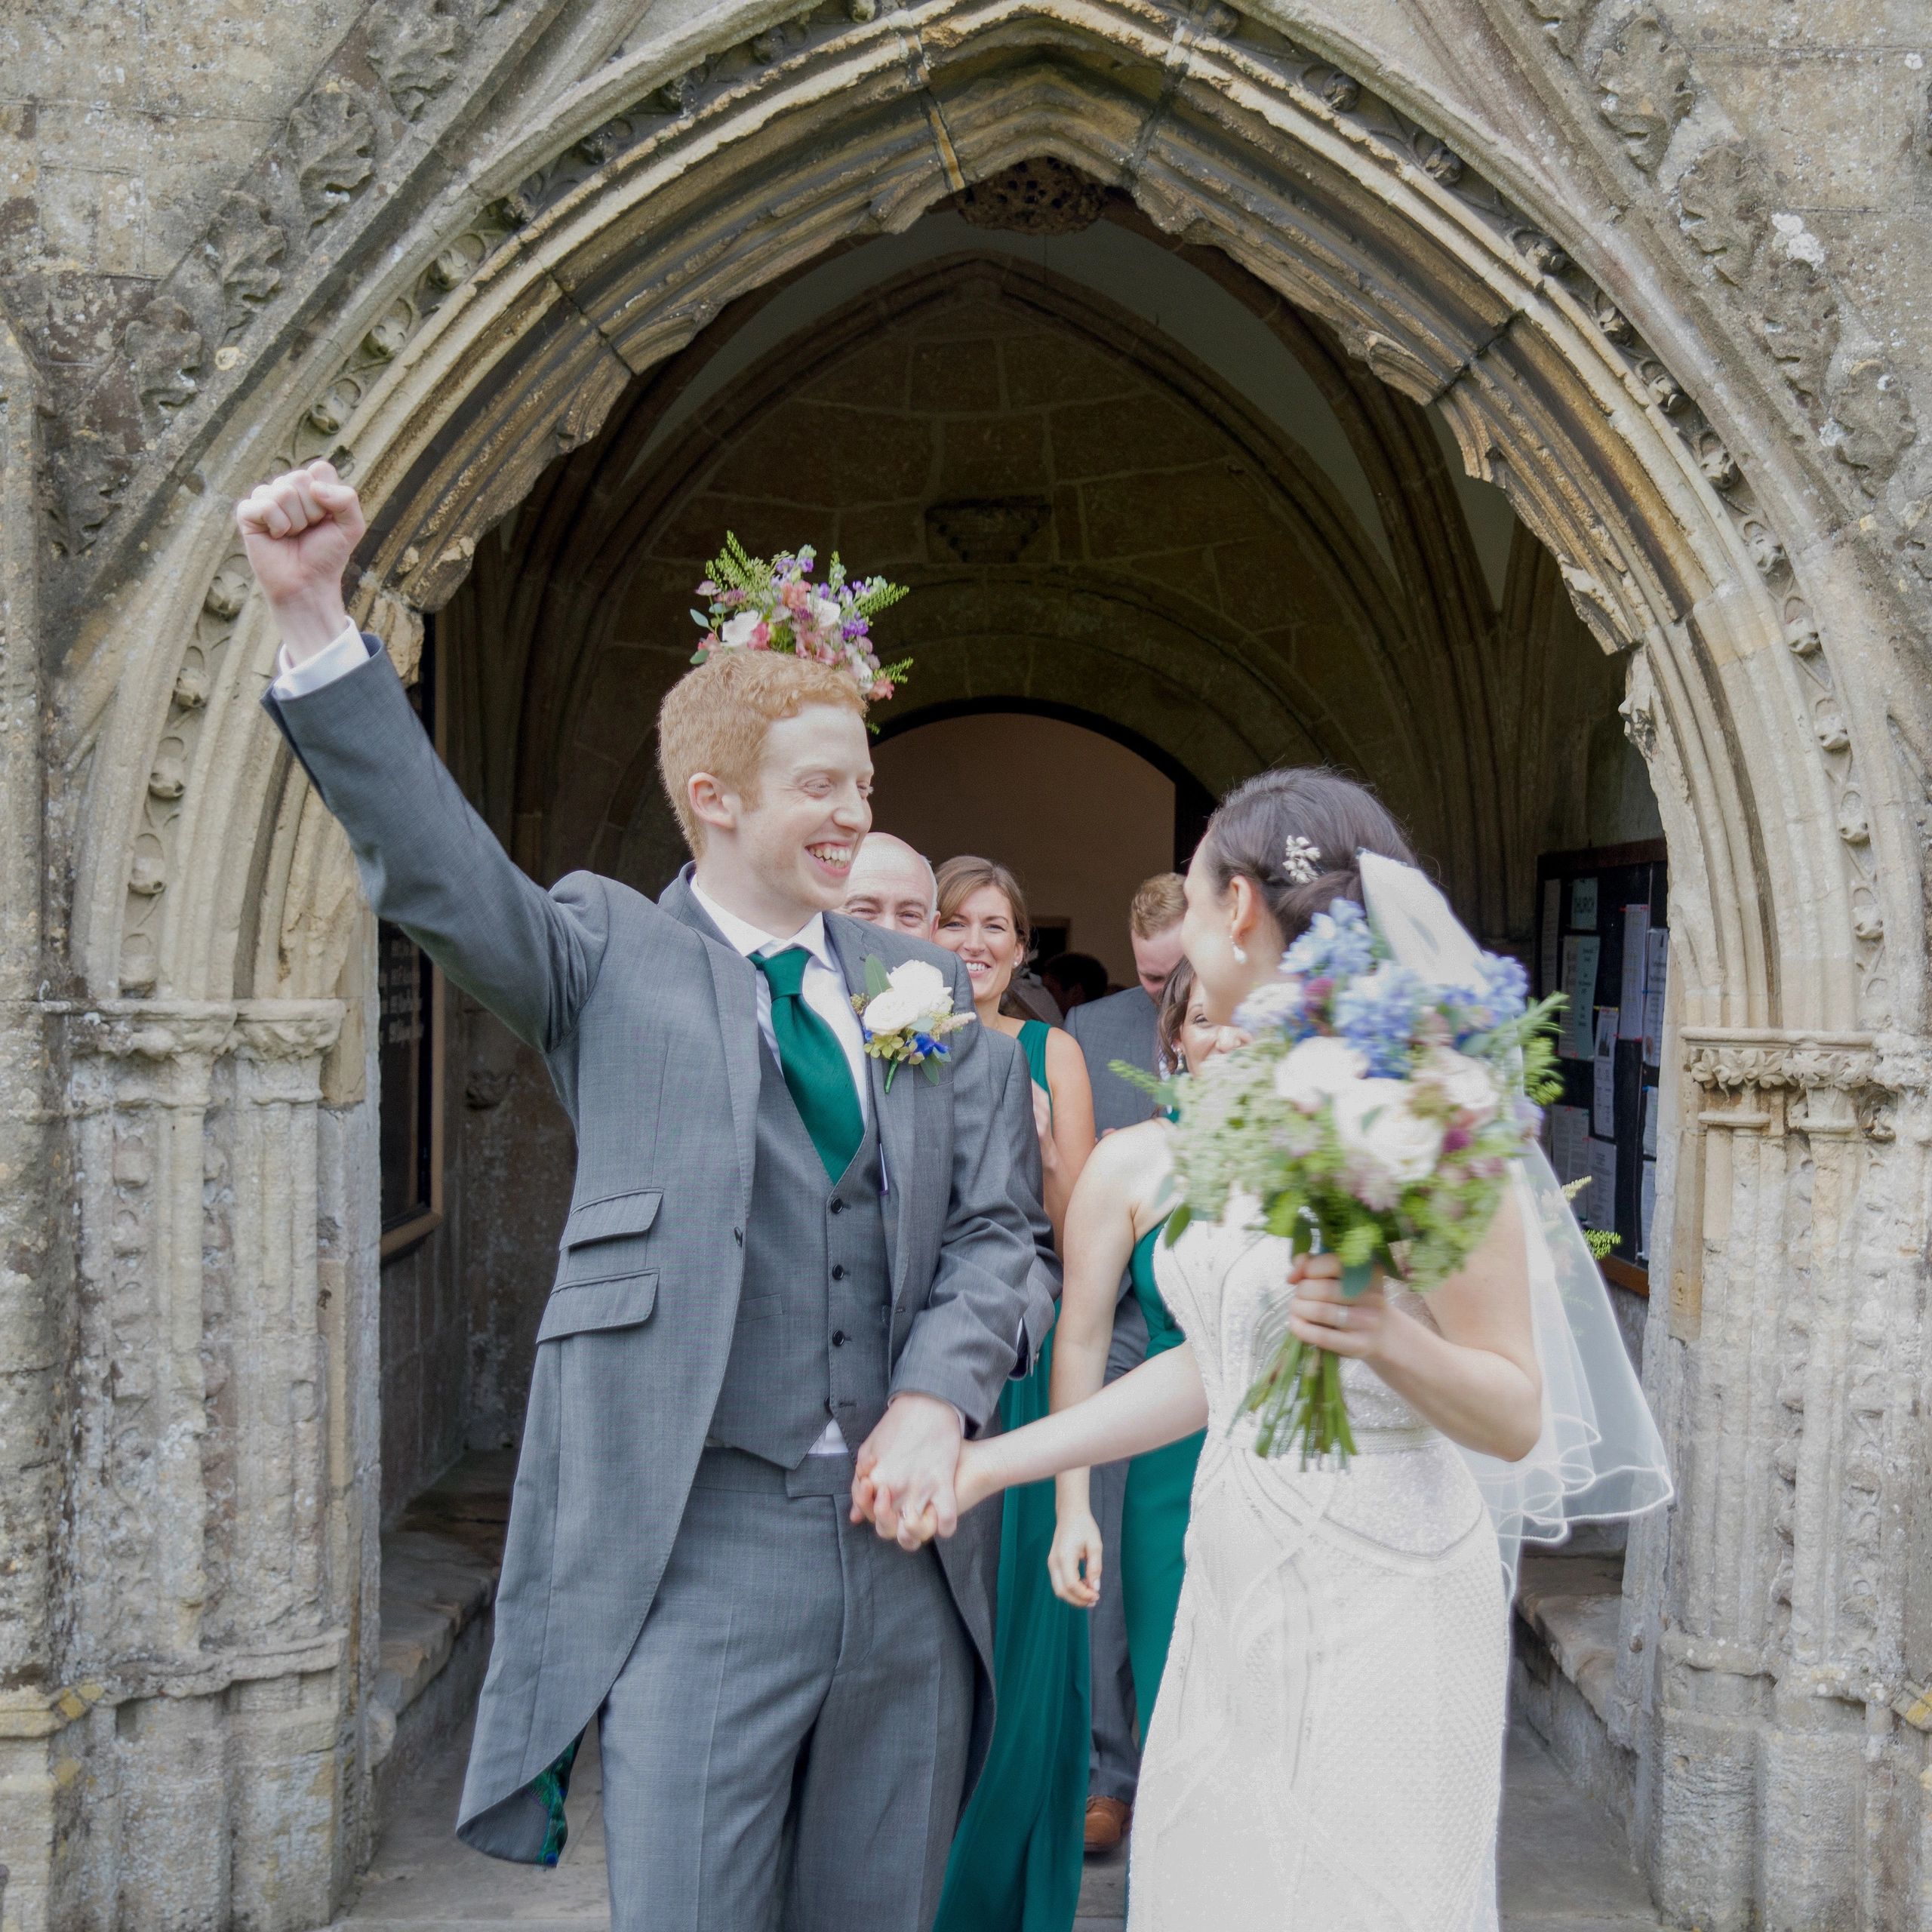 Bridal Party fun contemporary classic wedding photography reportage photo Church wedding Wiltshire